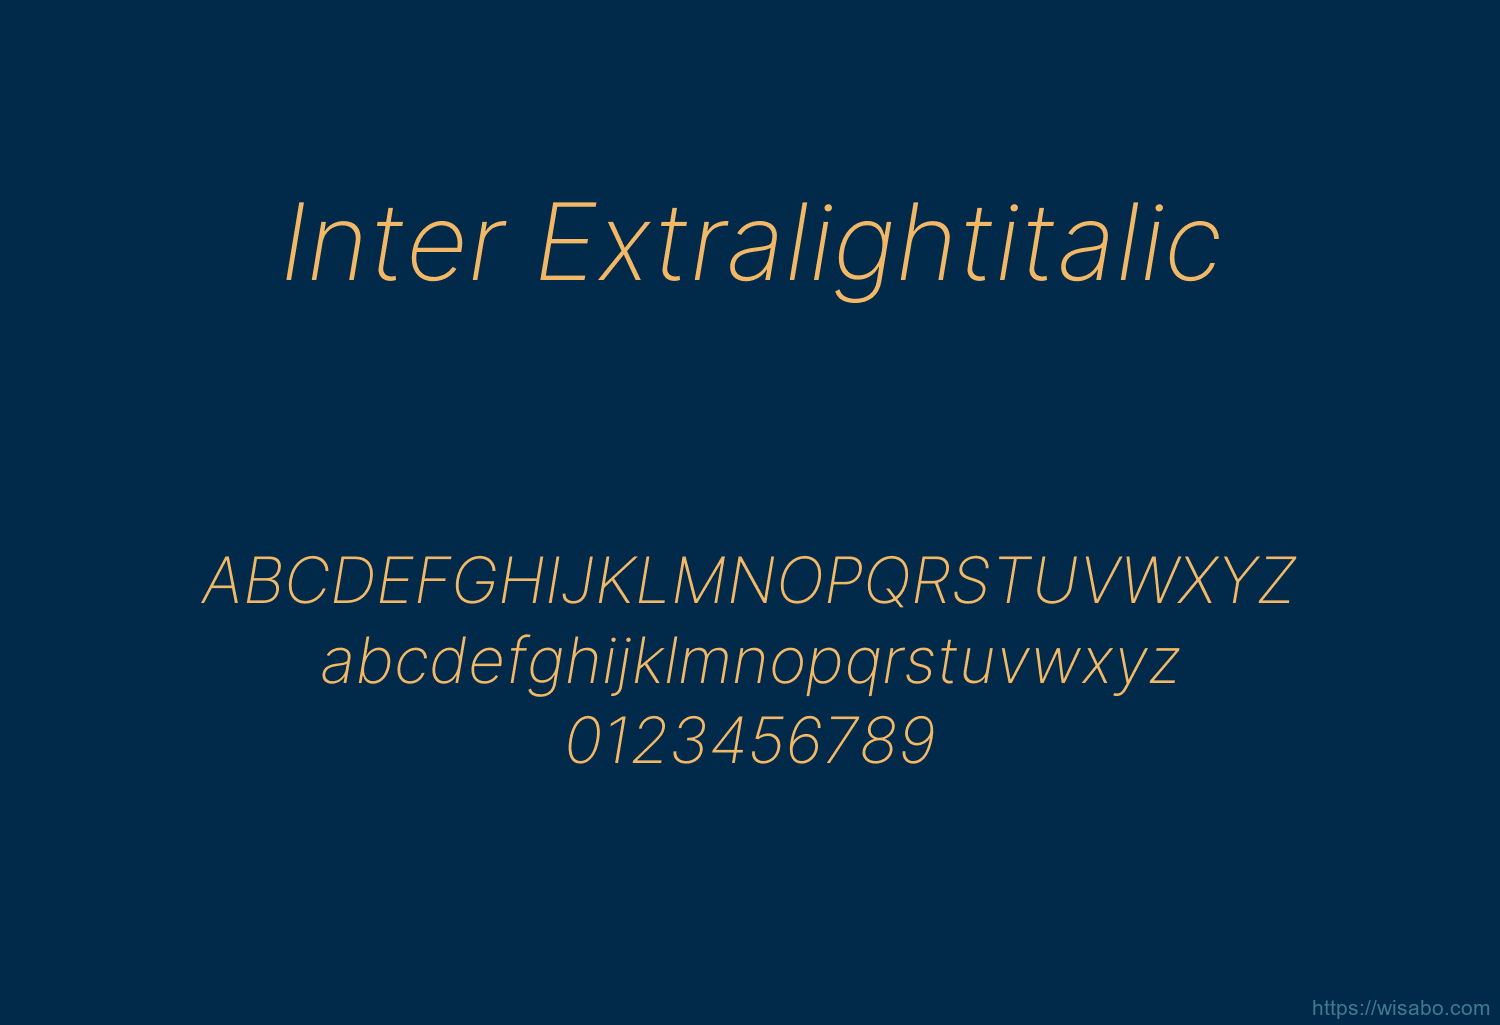 Inter Extralightitalic